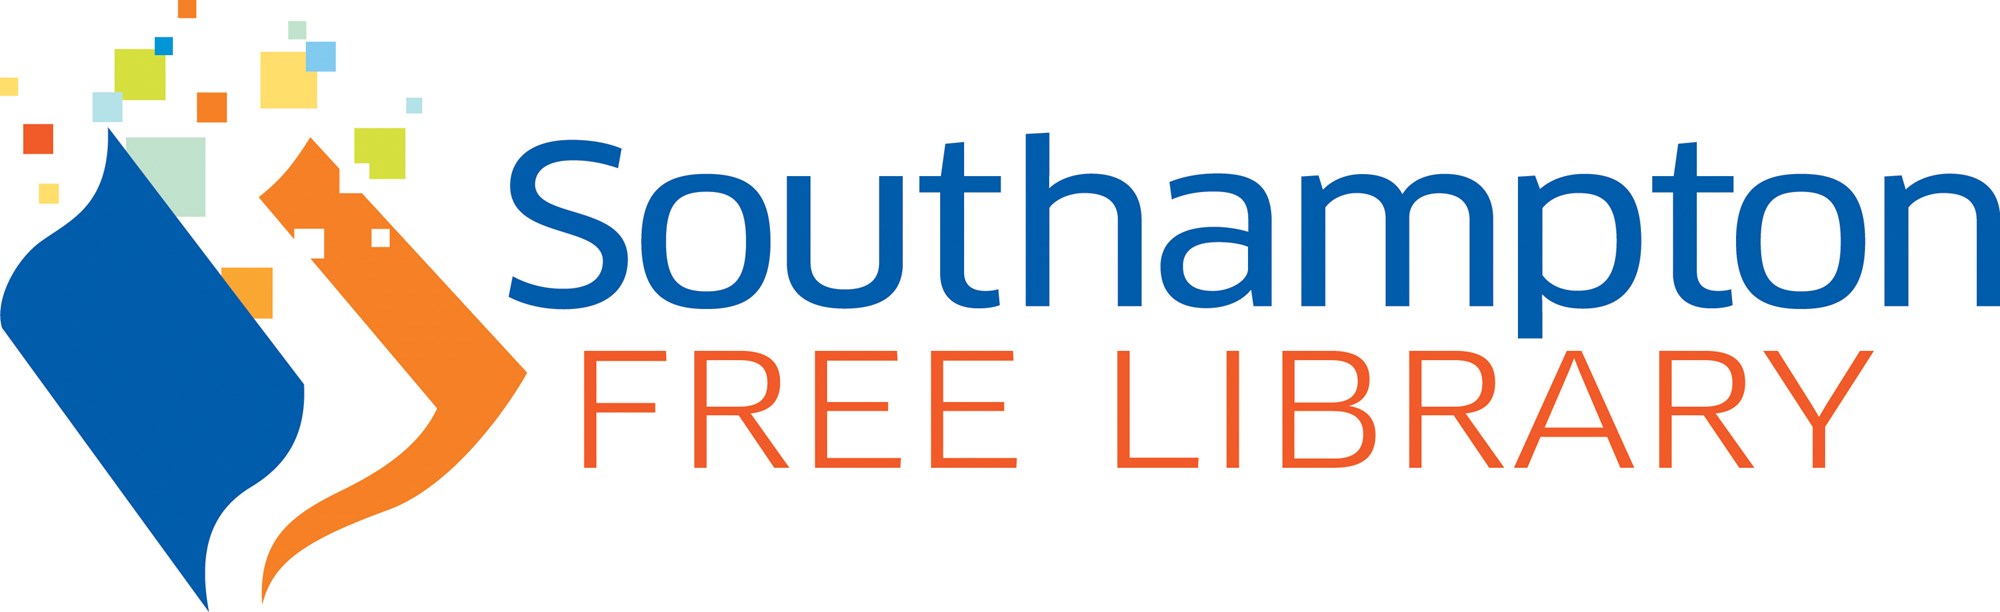 Southampton Free Library